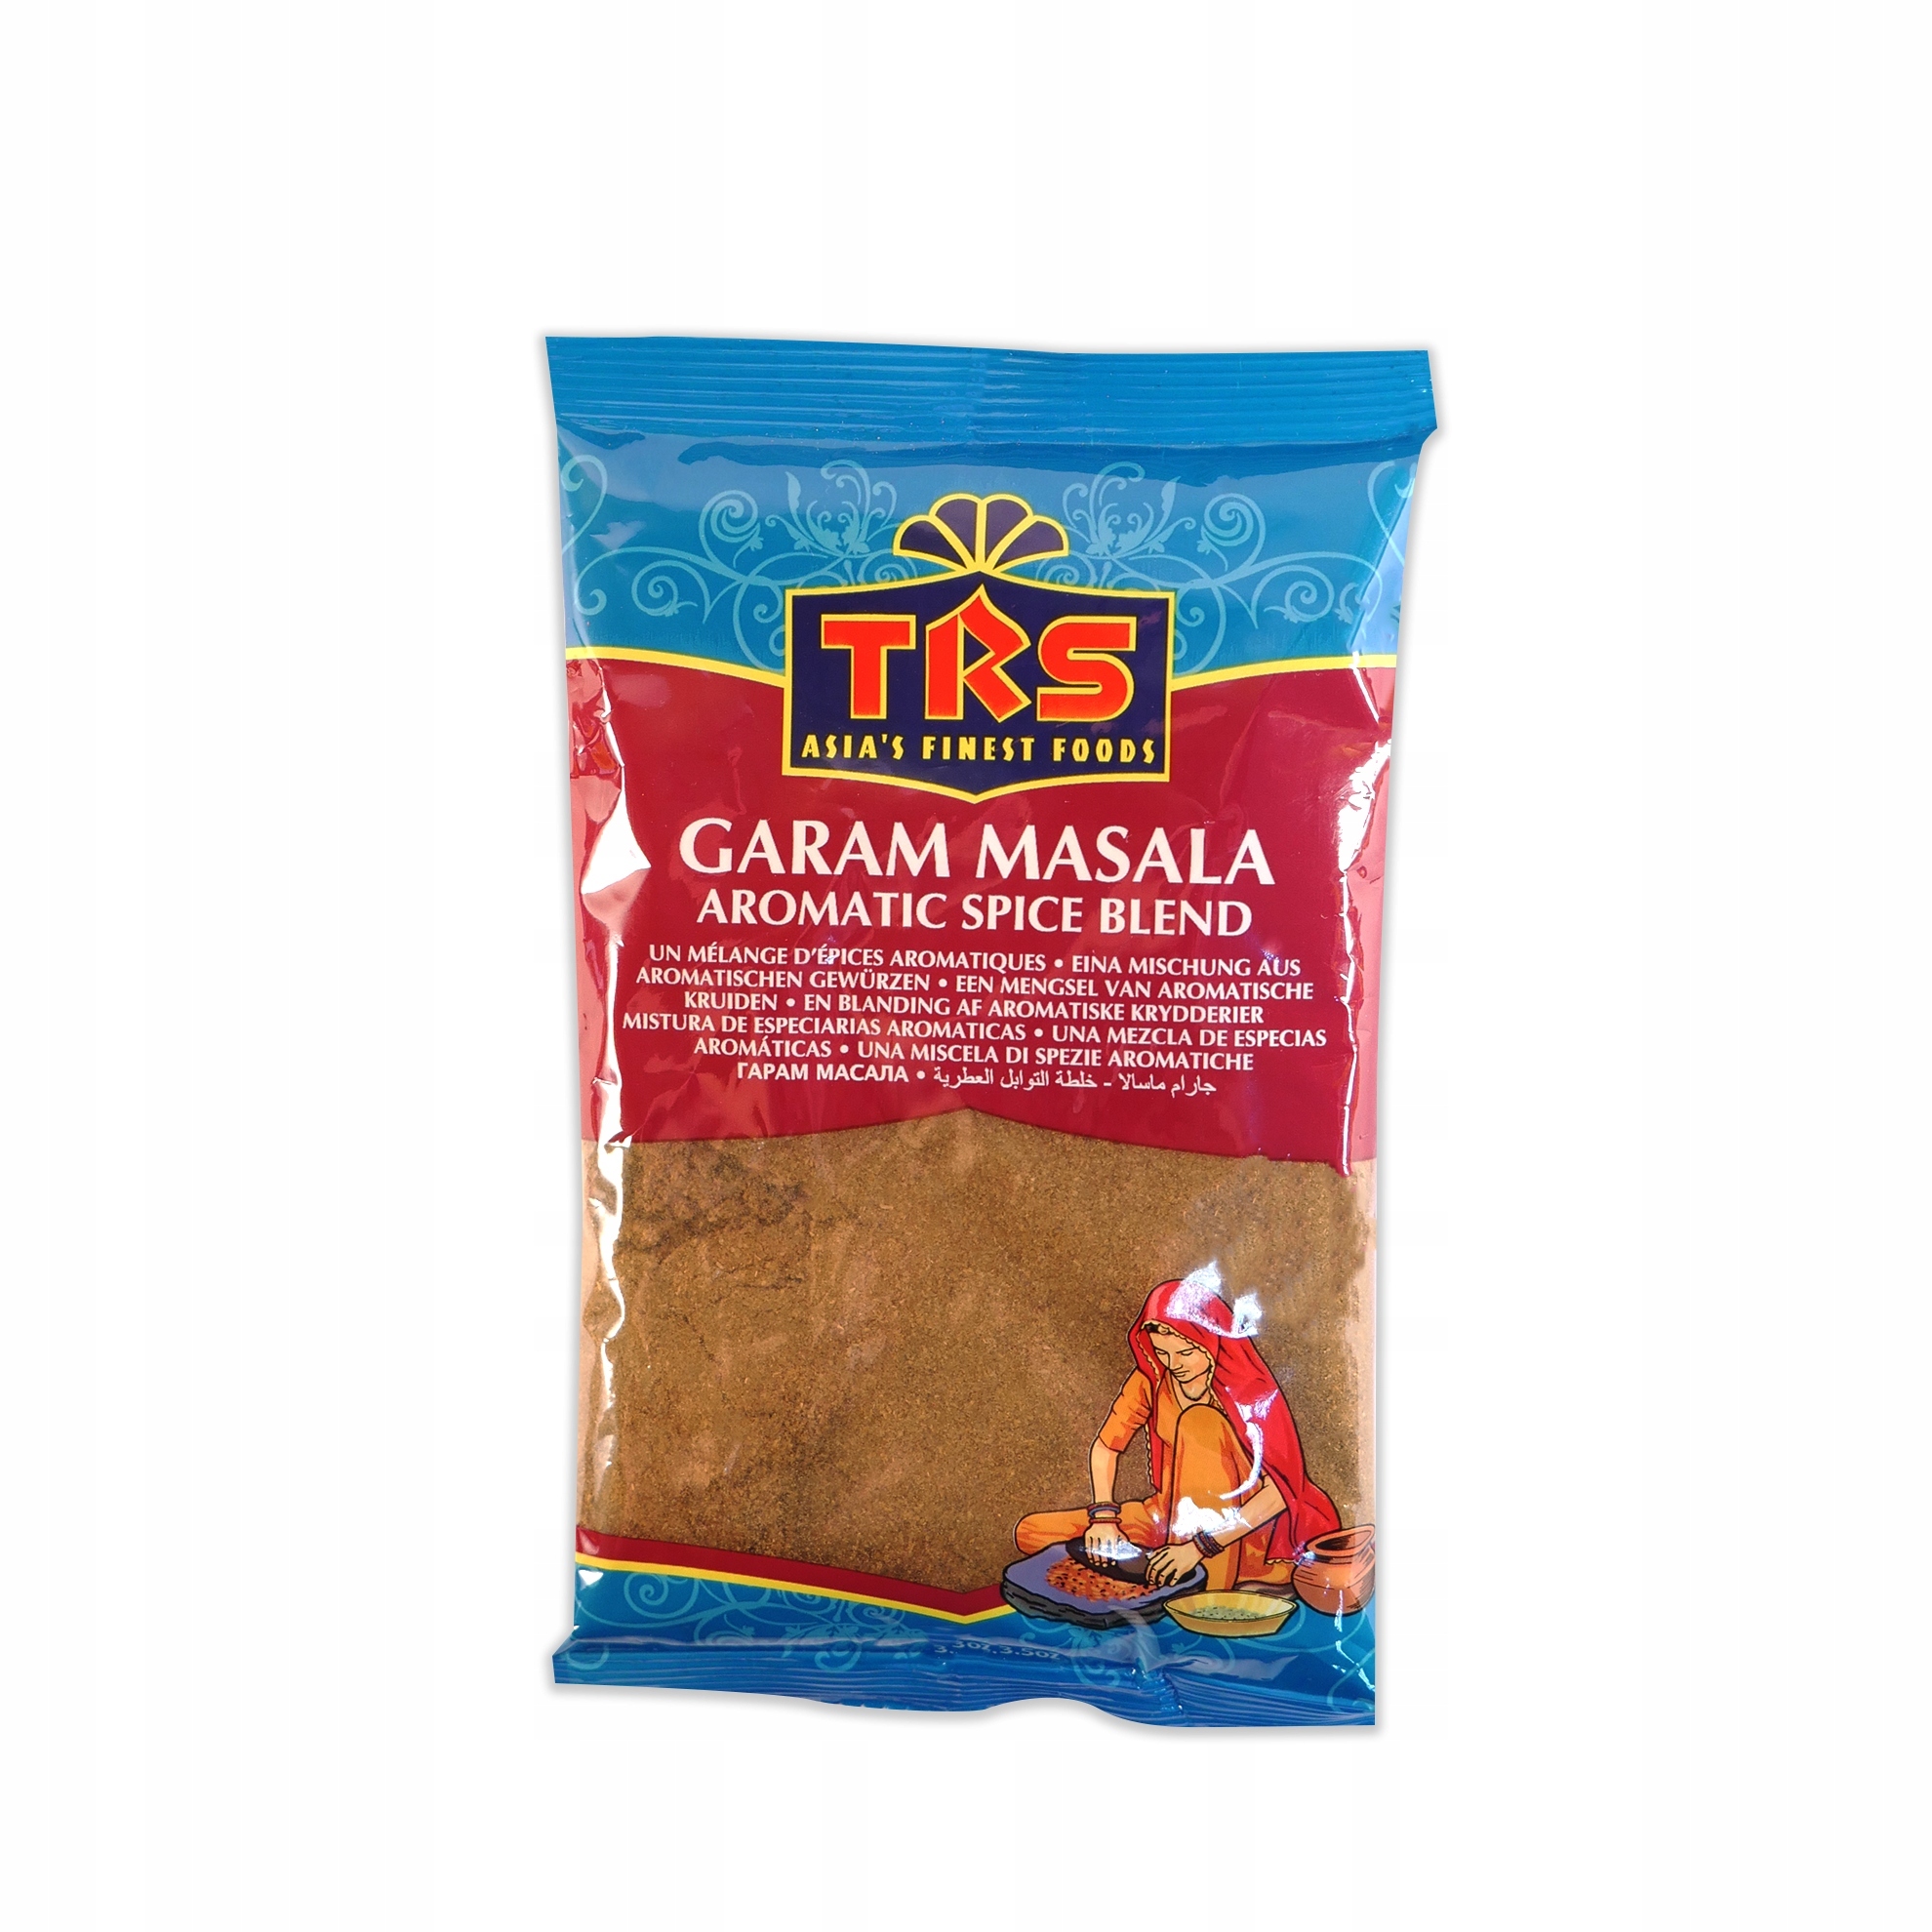 GARAM MASALA Aromatic Spice Blend, TRS (ГАРАМ МАСАЛА ароматная смесь специй, ТРС), 1 кг.